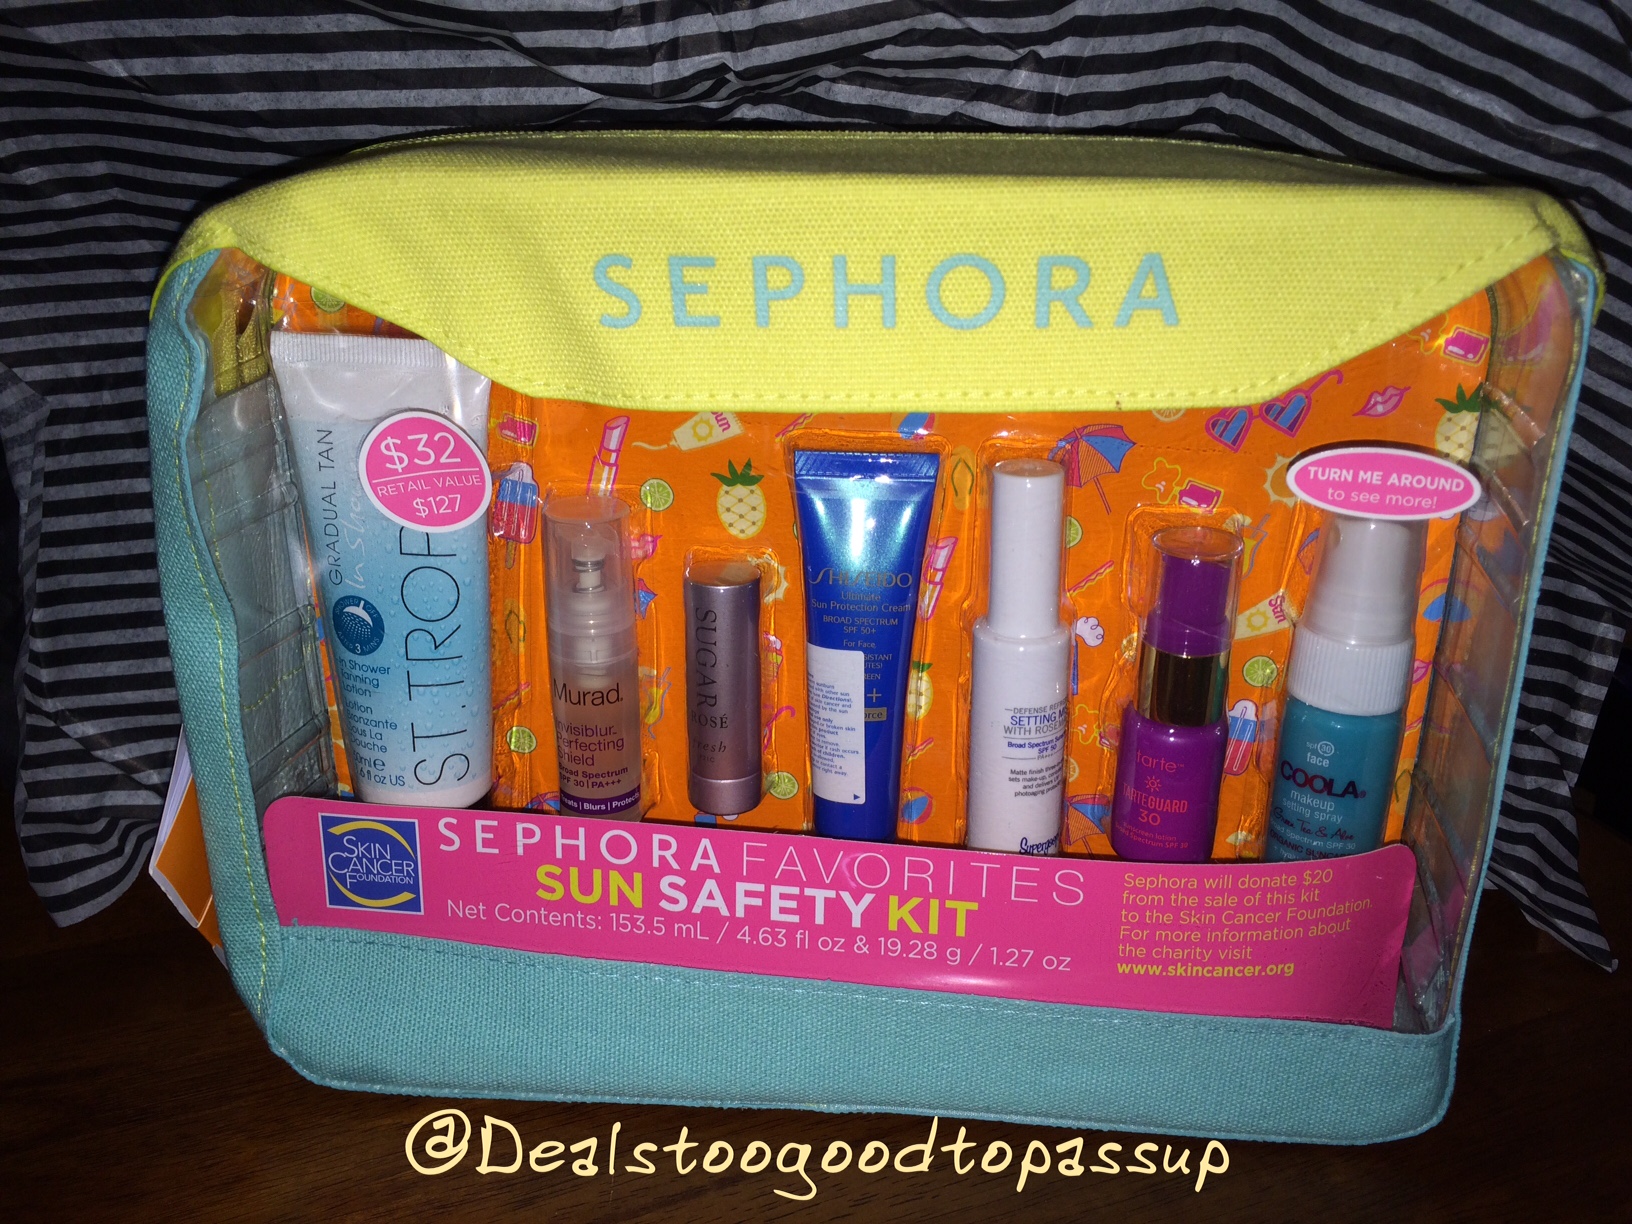 Sephora Sun Safety Kit 2016.jpg